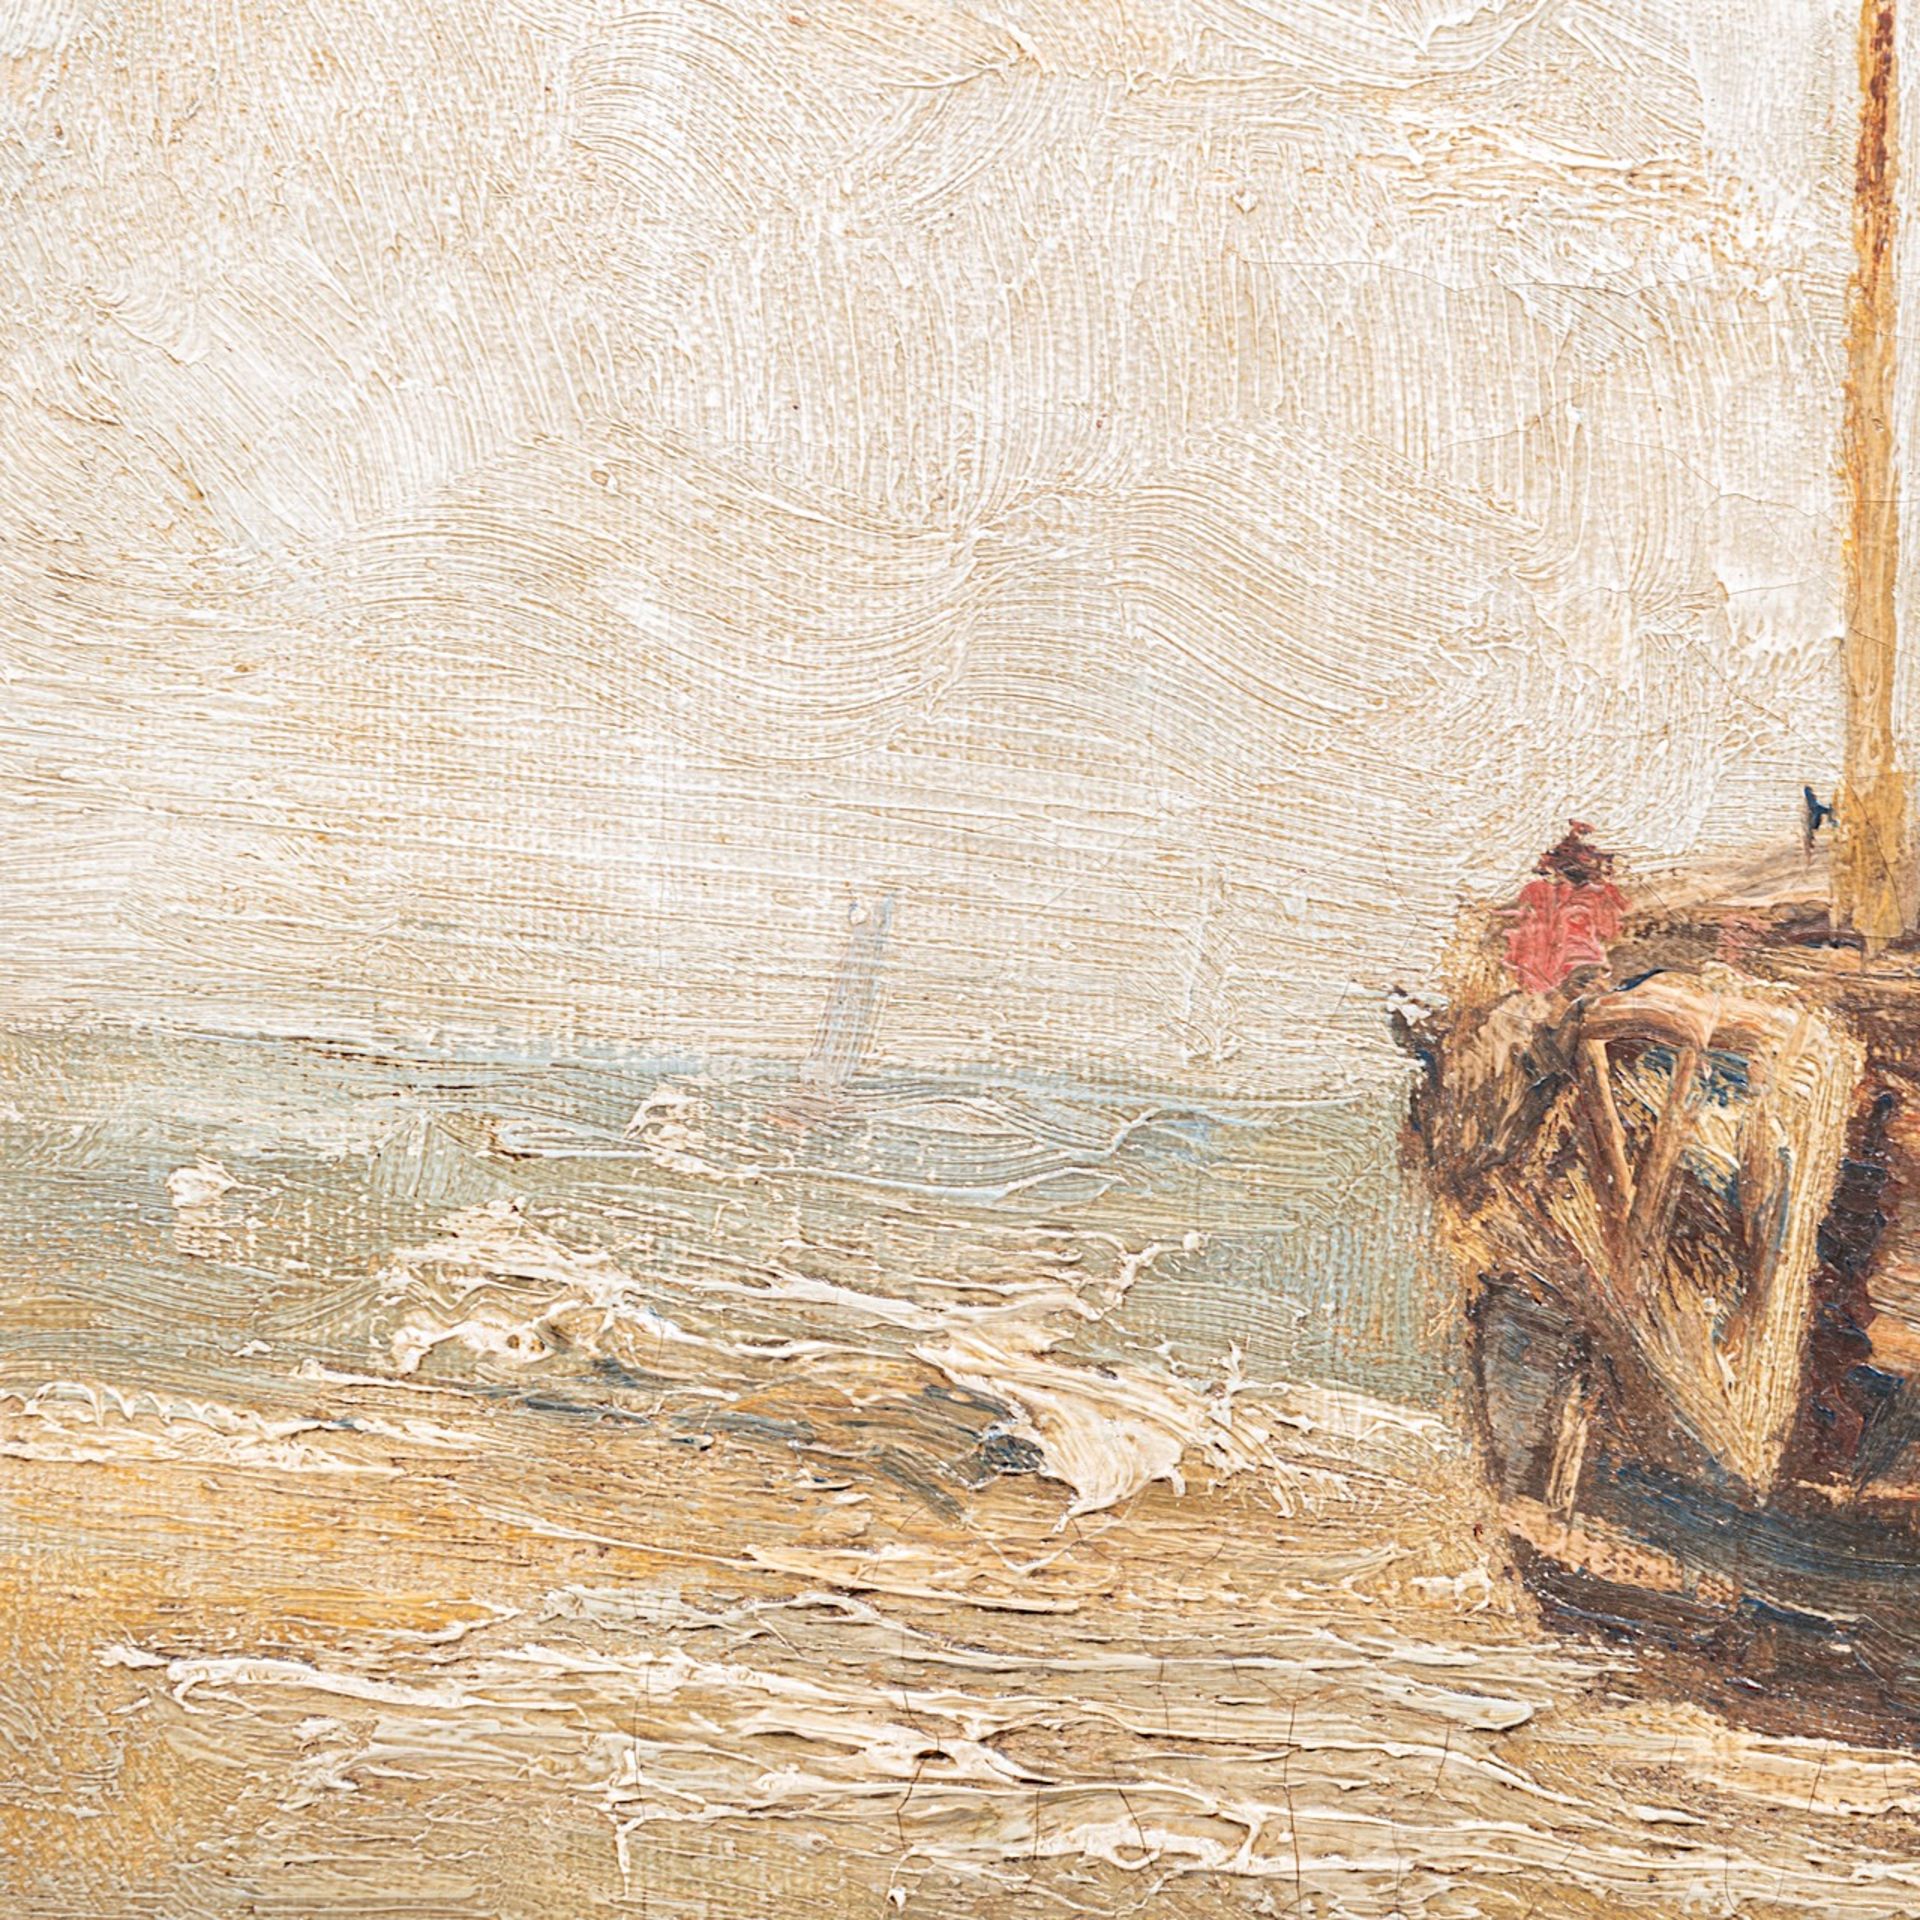 Valerius De Saedeleer (1867-1942), 'La barque a maree basse', 1890, oil on canvas 65 x 40 cm. (25.5 - Image 6 of 6